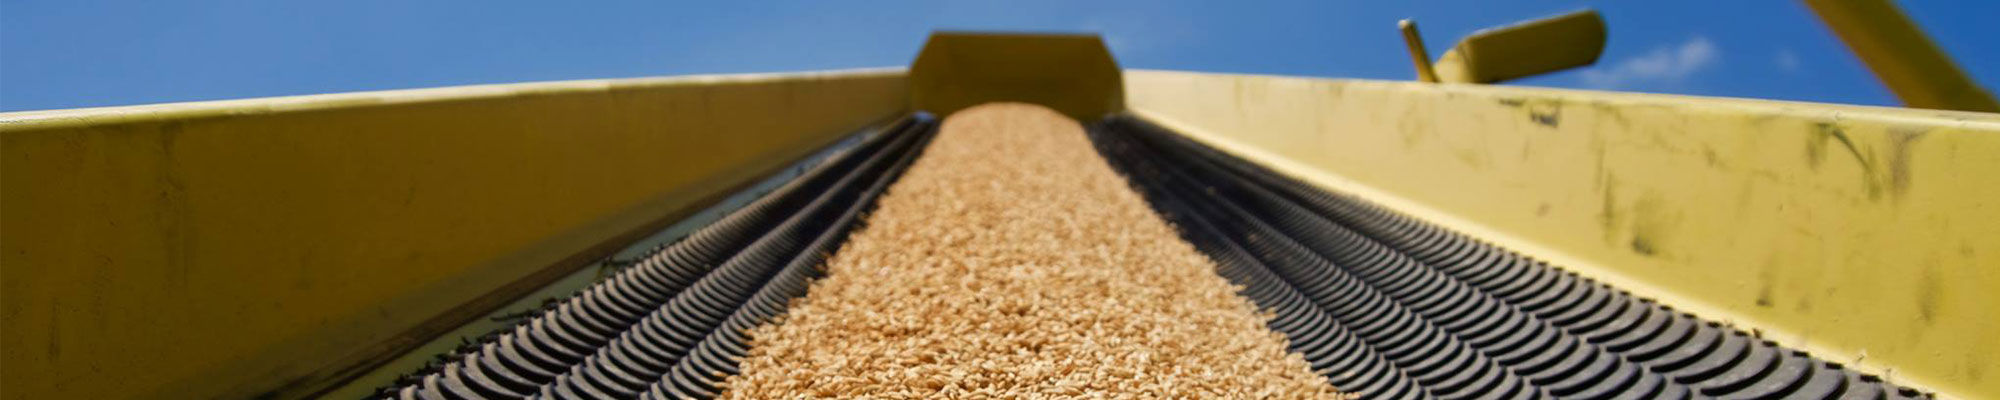 Rice on a conveyor belt